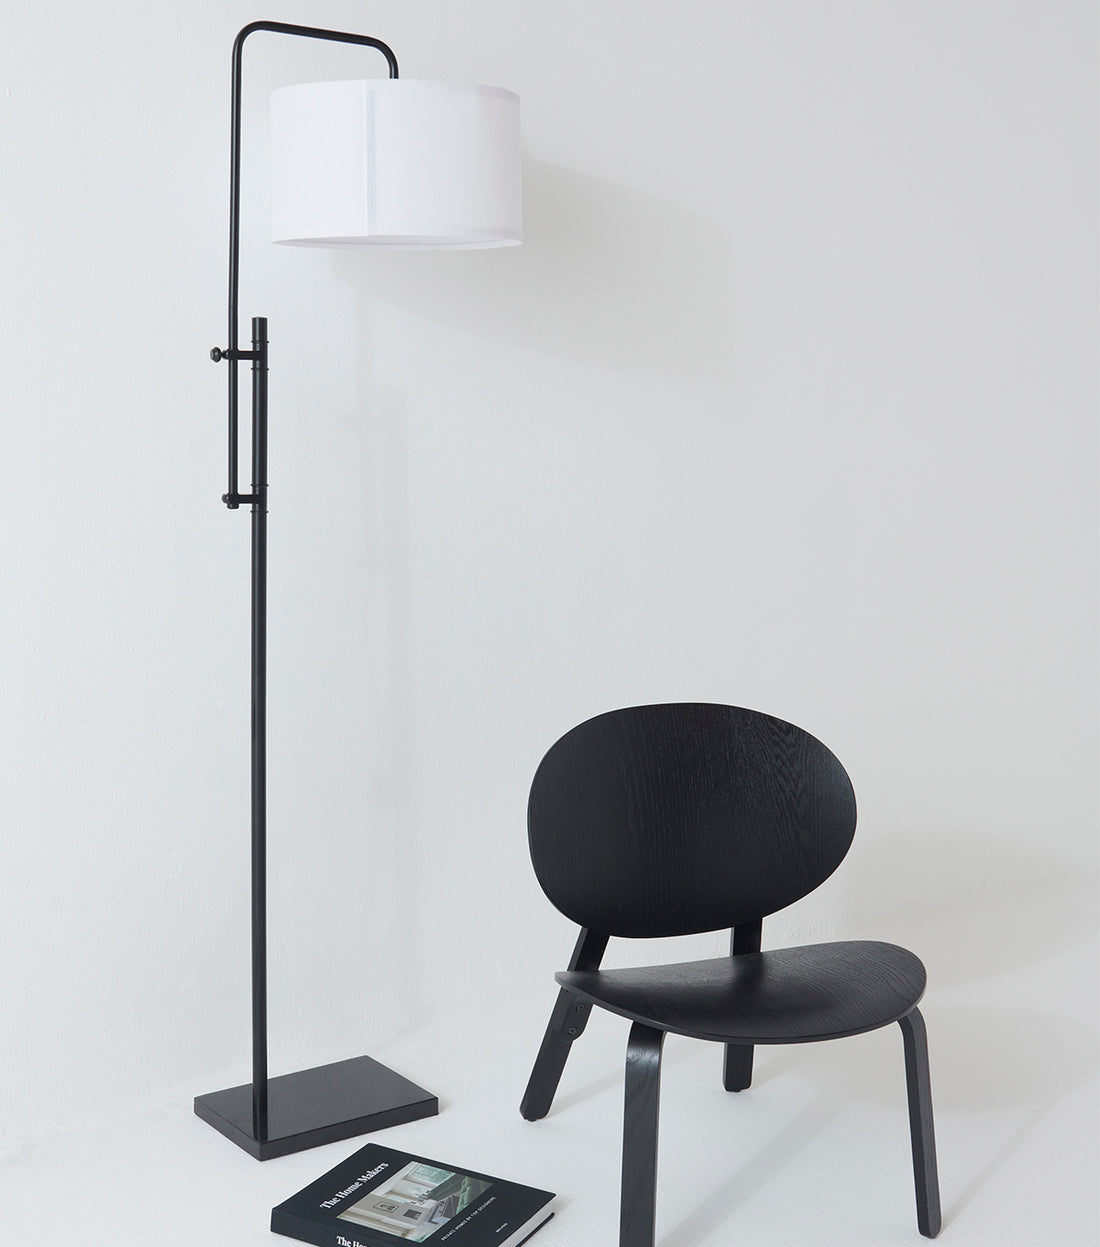 Brightech Leo - Led Floor Lamp for Living Room, Bedroom & Office - Standing Accent Lamp - Modern Tall Pole Light Overhangs for Reading